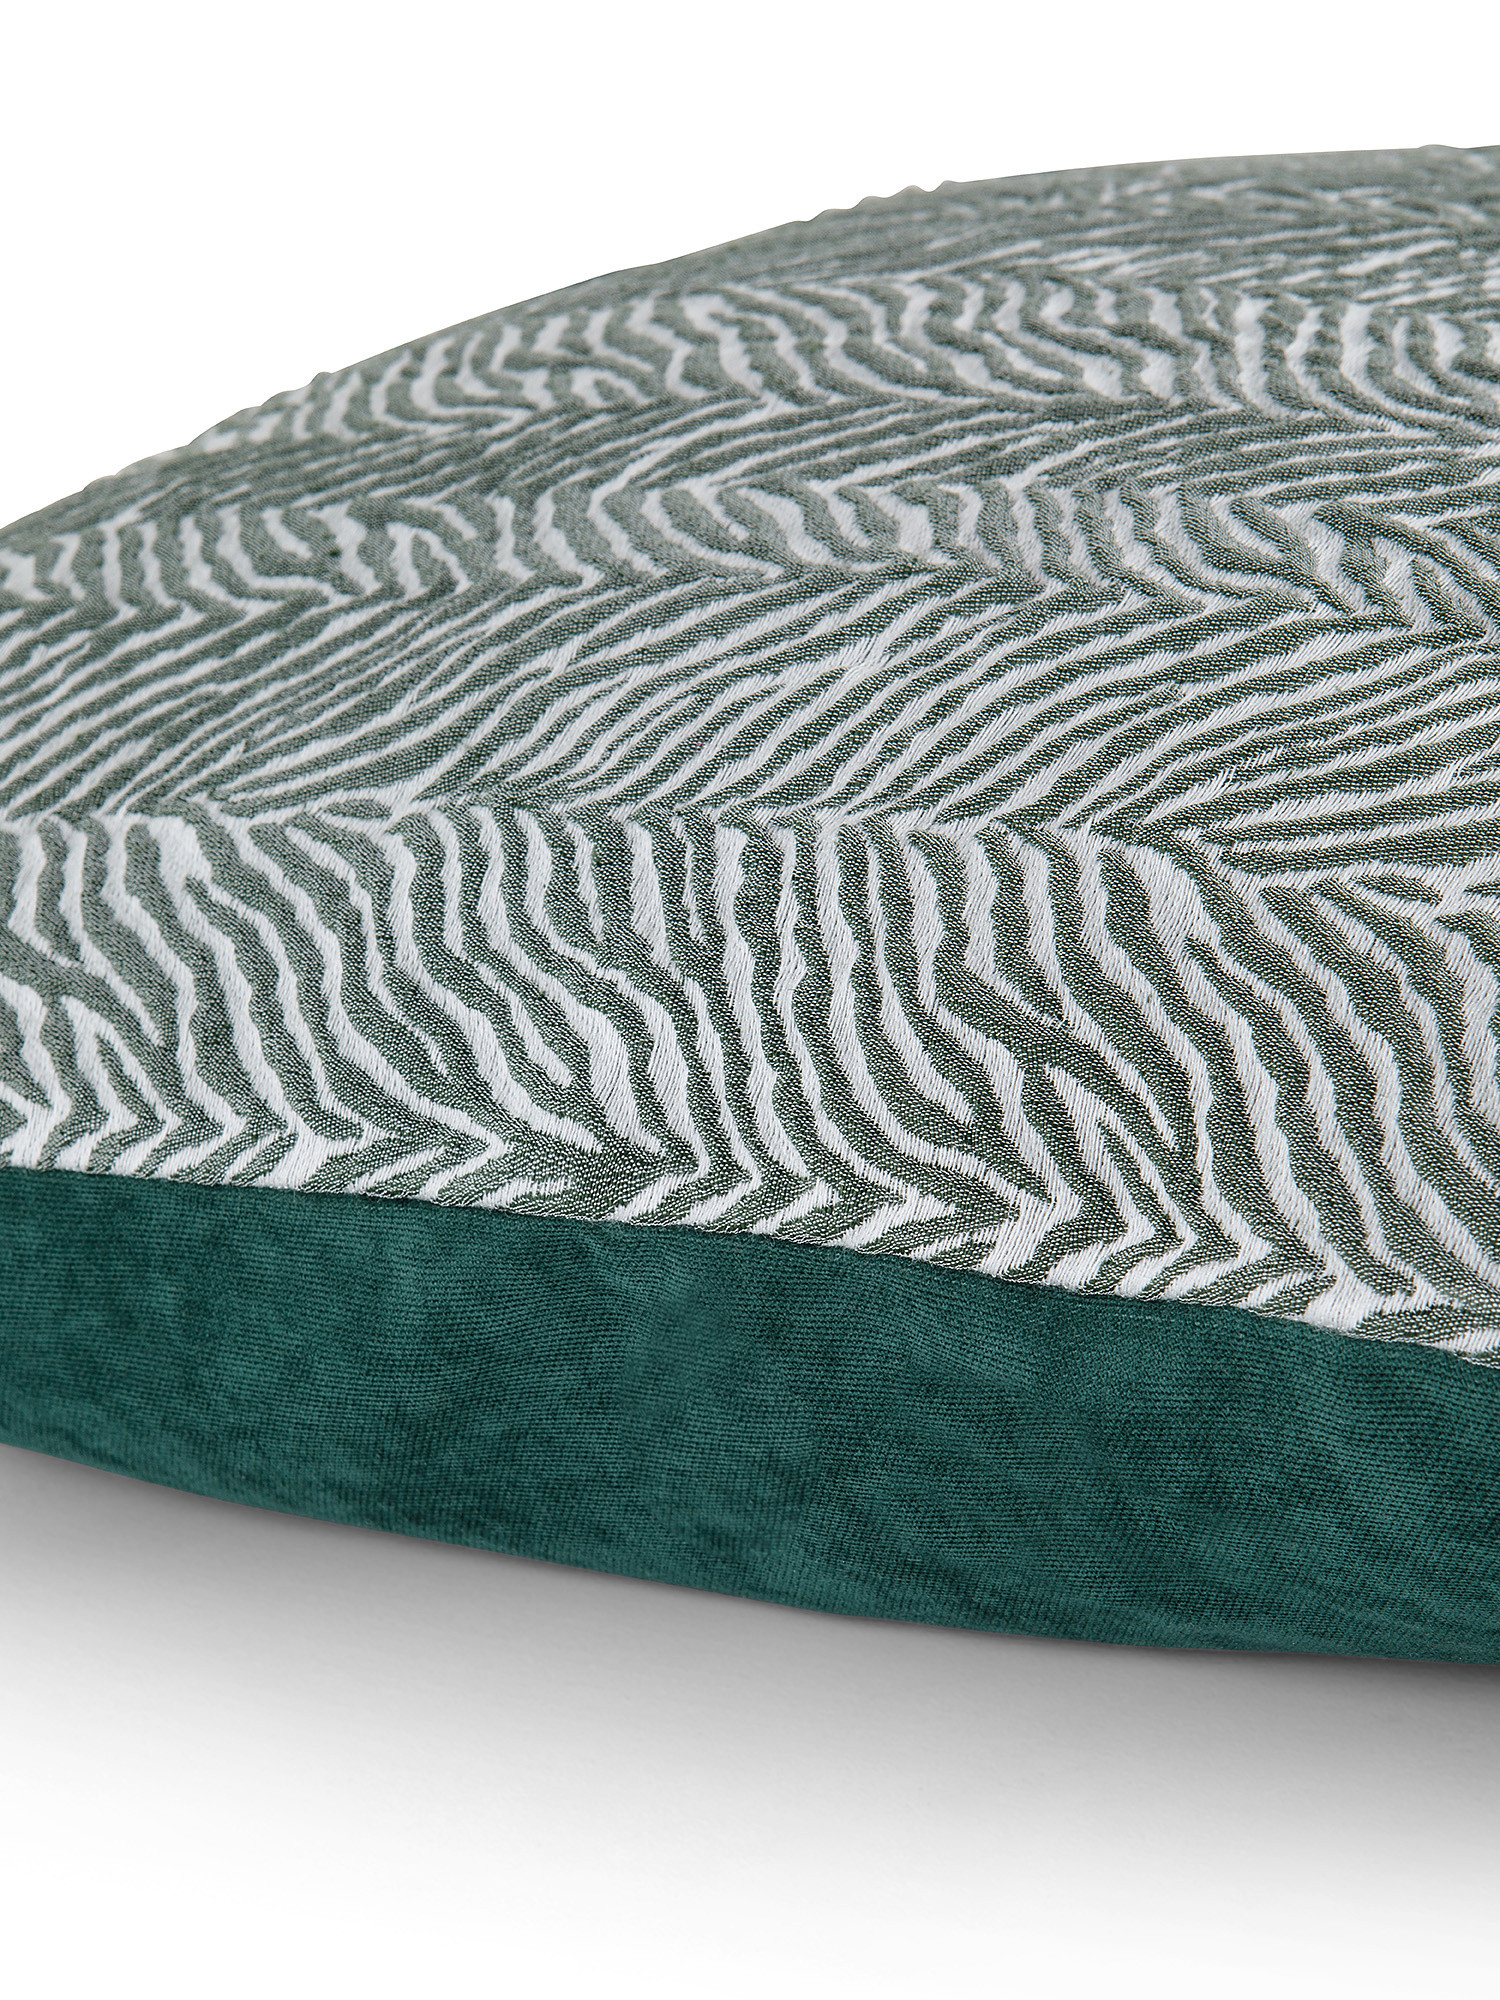 Jacquard cushion with zebra motif 50x50cm, Green, large image number 2